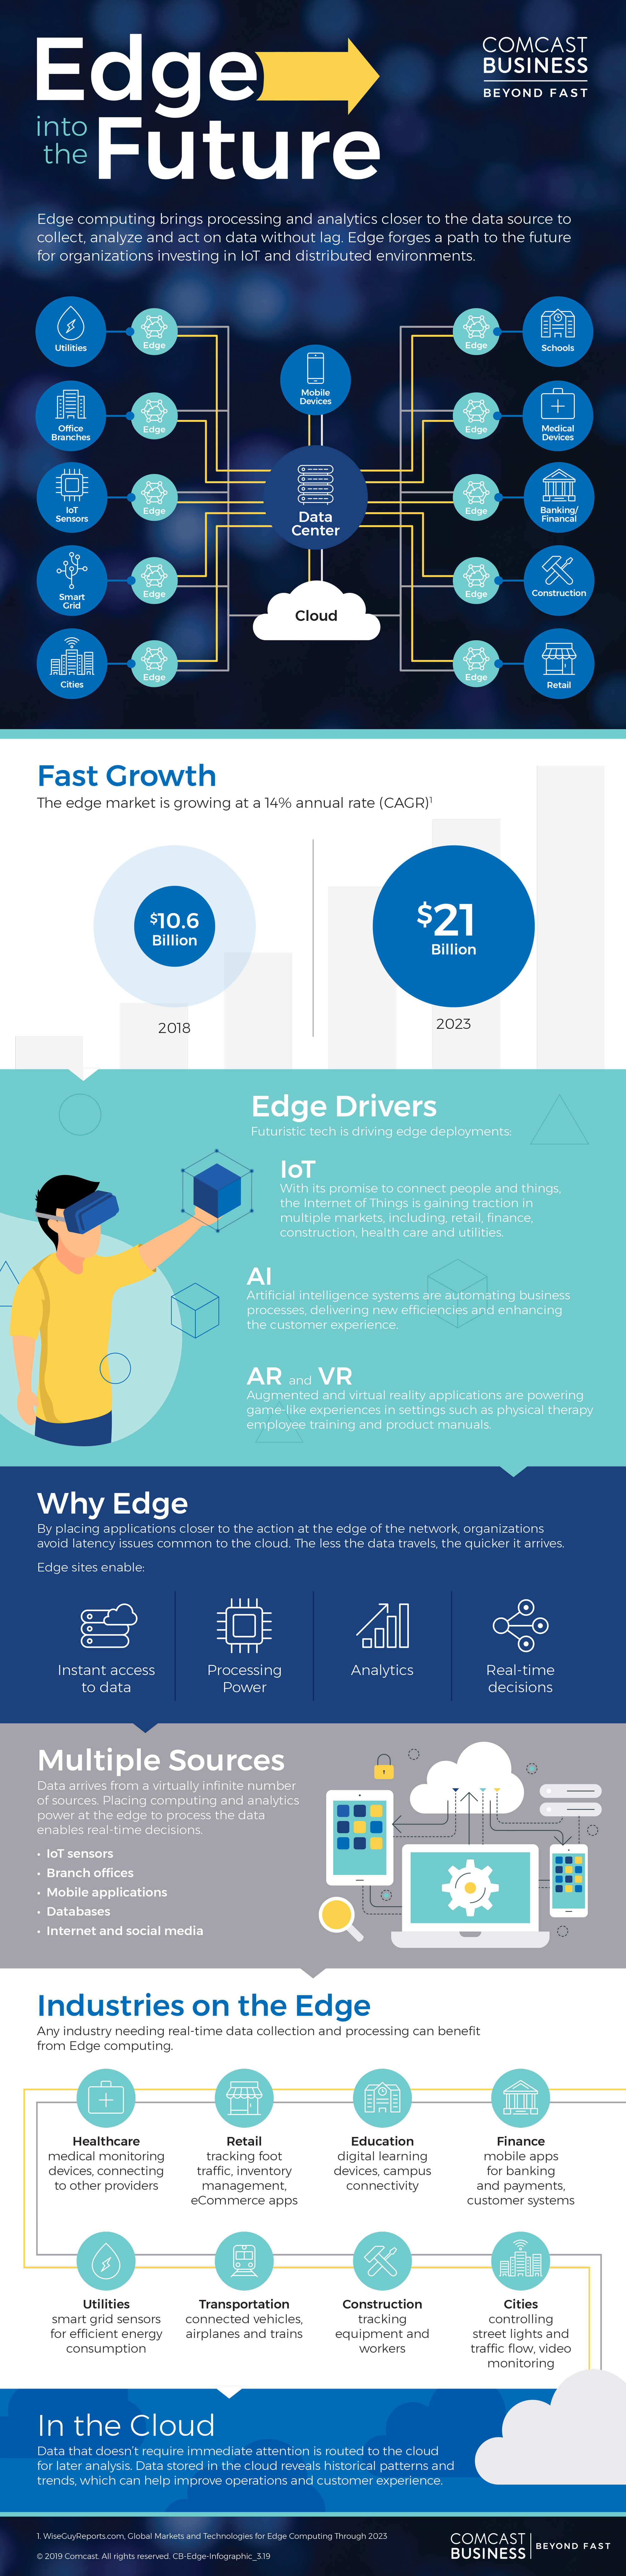 Edge into the Future infographic